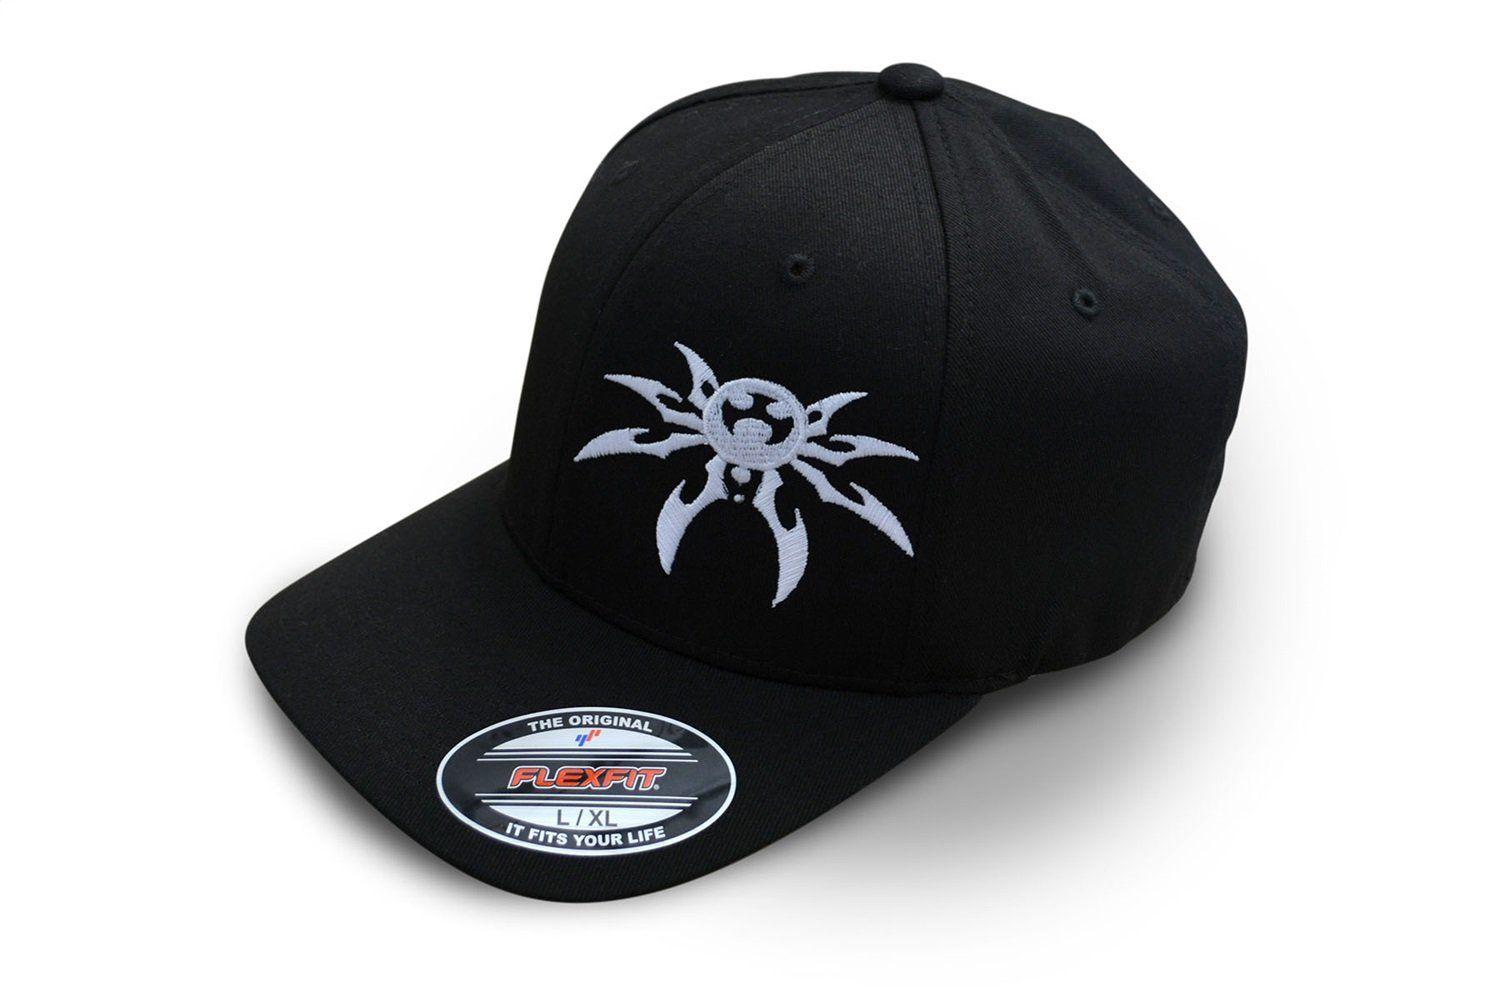 Spyder Logo - Amazon.com: Poison Spyder Spyder Logo FlexFit Ball Cap - Black ...